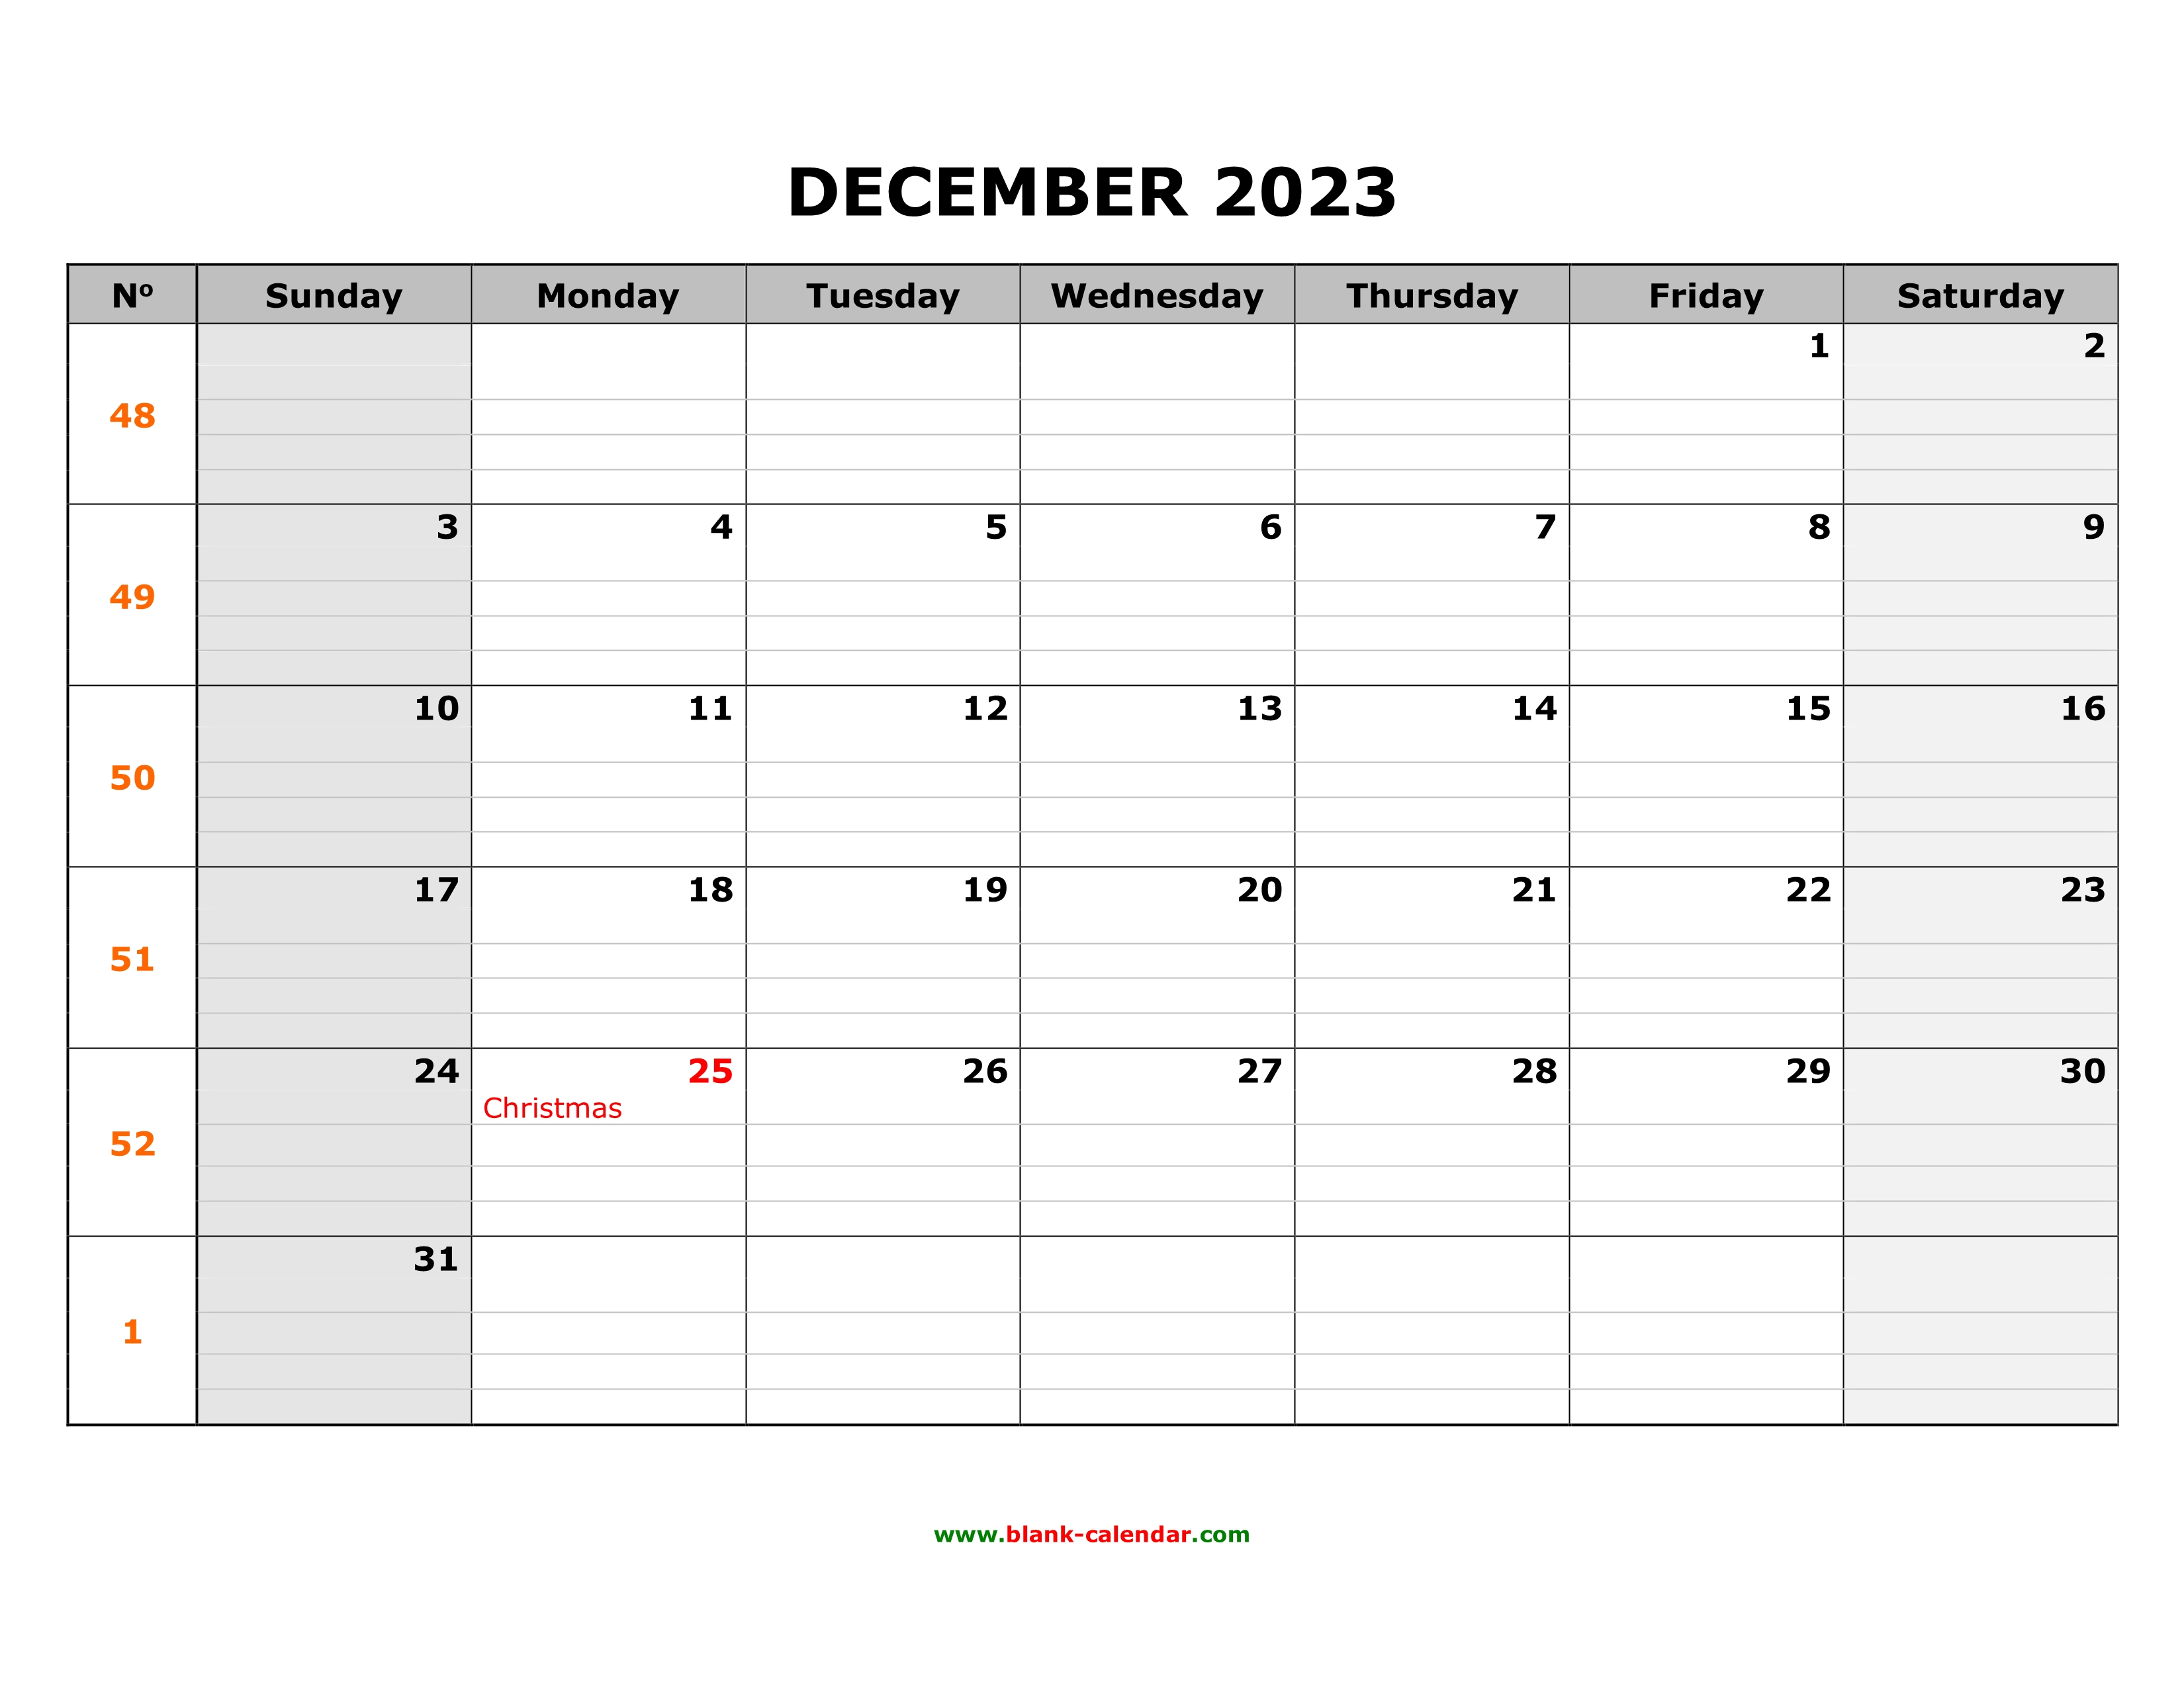 Free Download Printable December 2023 Calendar Large Box Grid Space